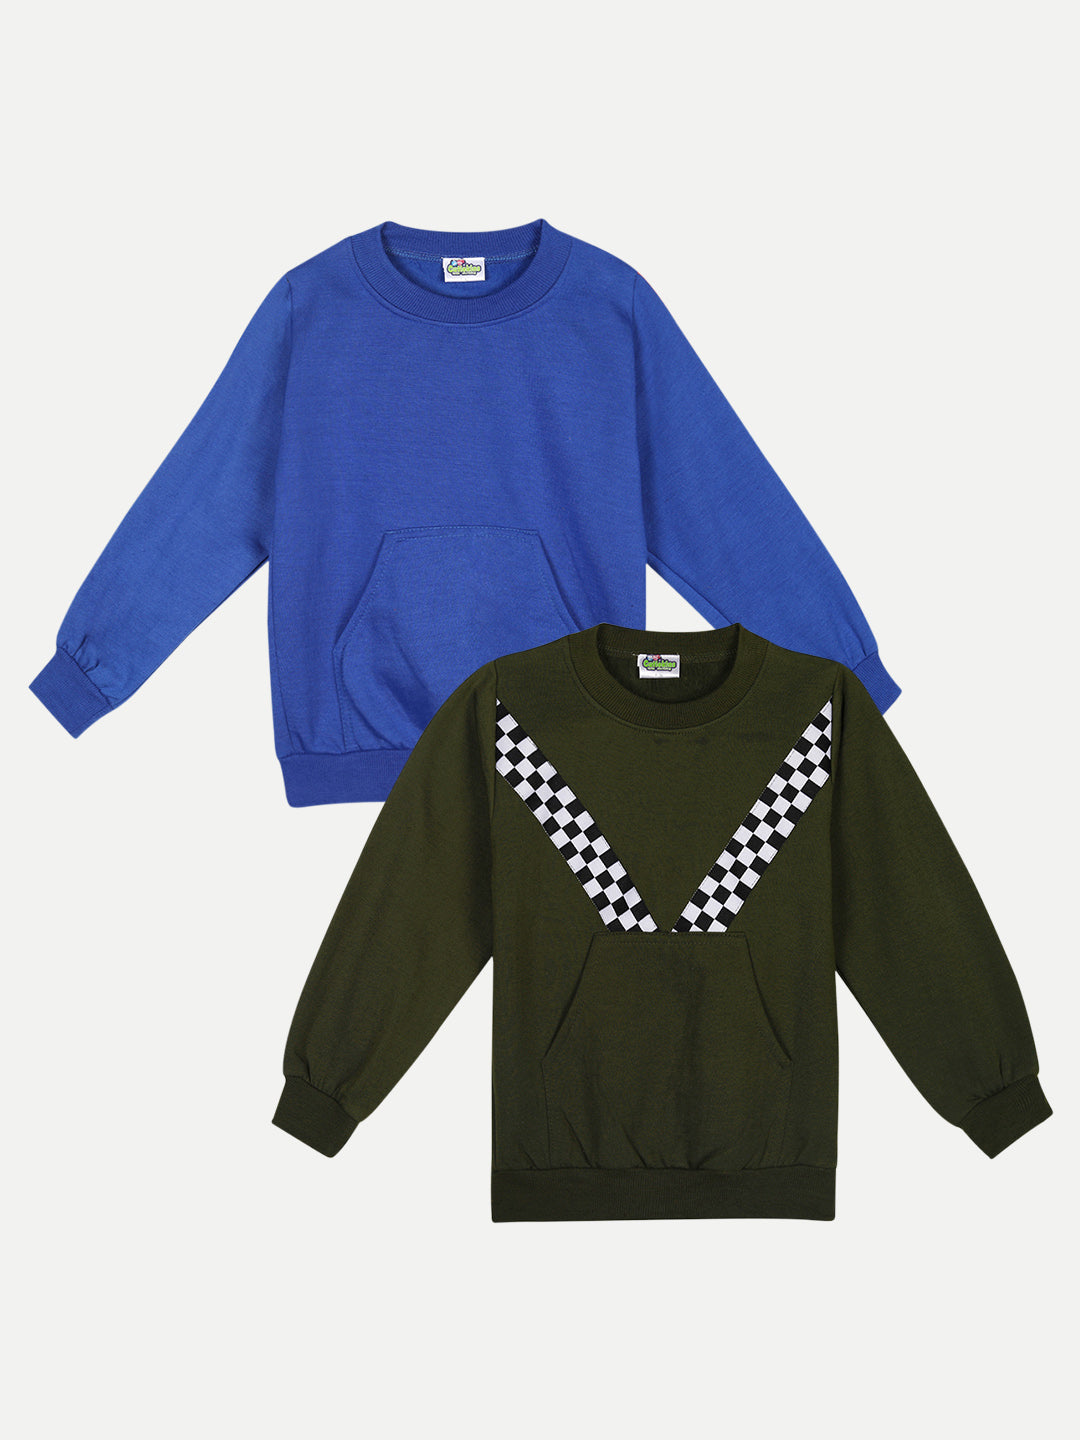 Cutiekins Pack of 2 Sweatshirt -Royal Blue & Mehndi Green